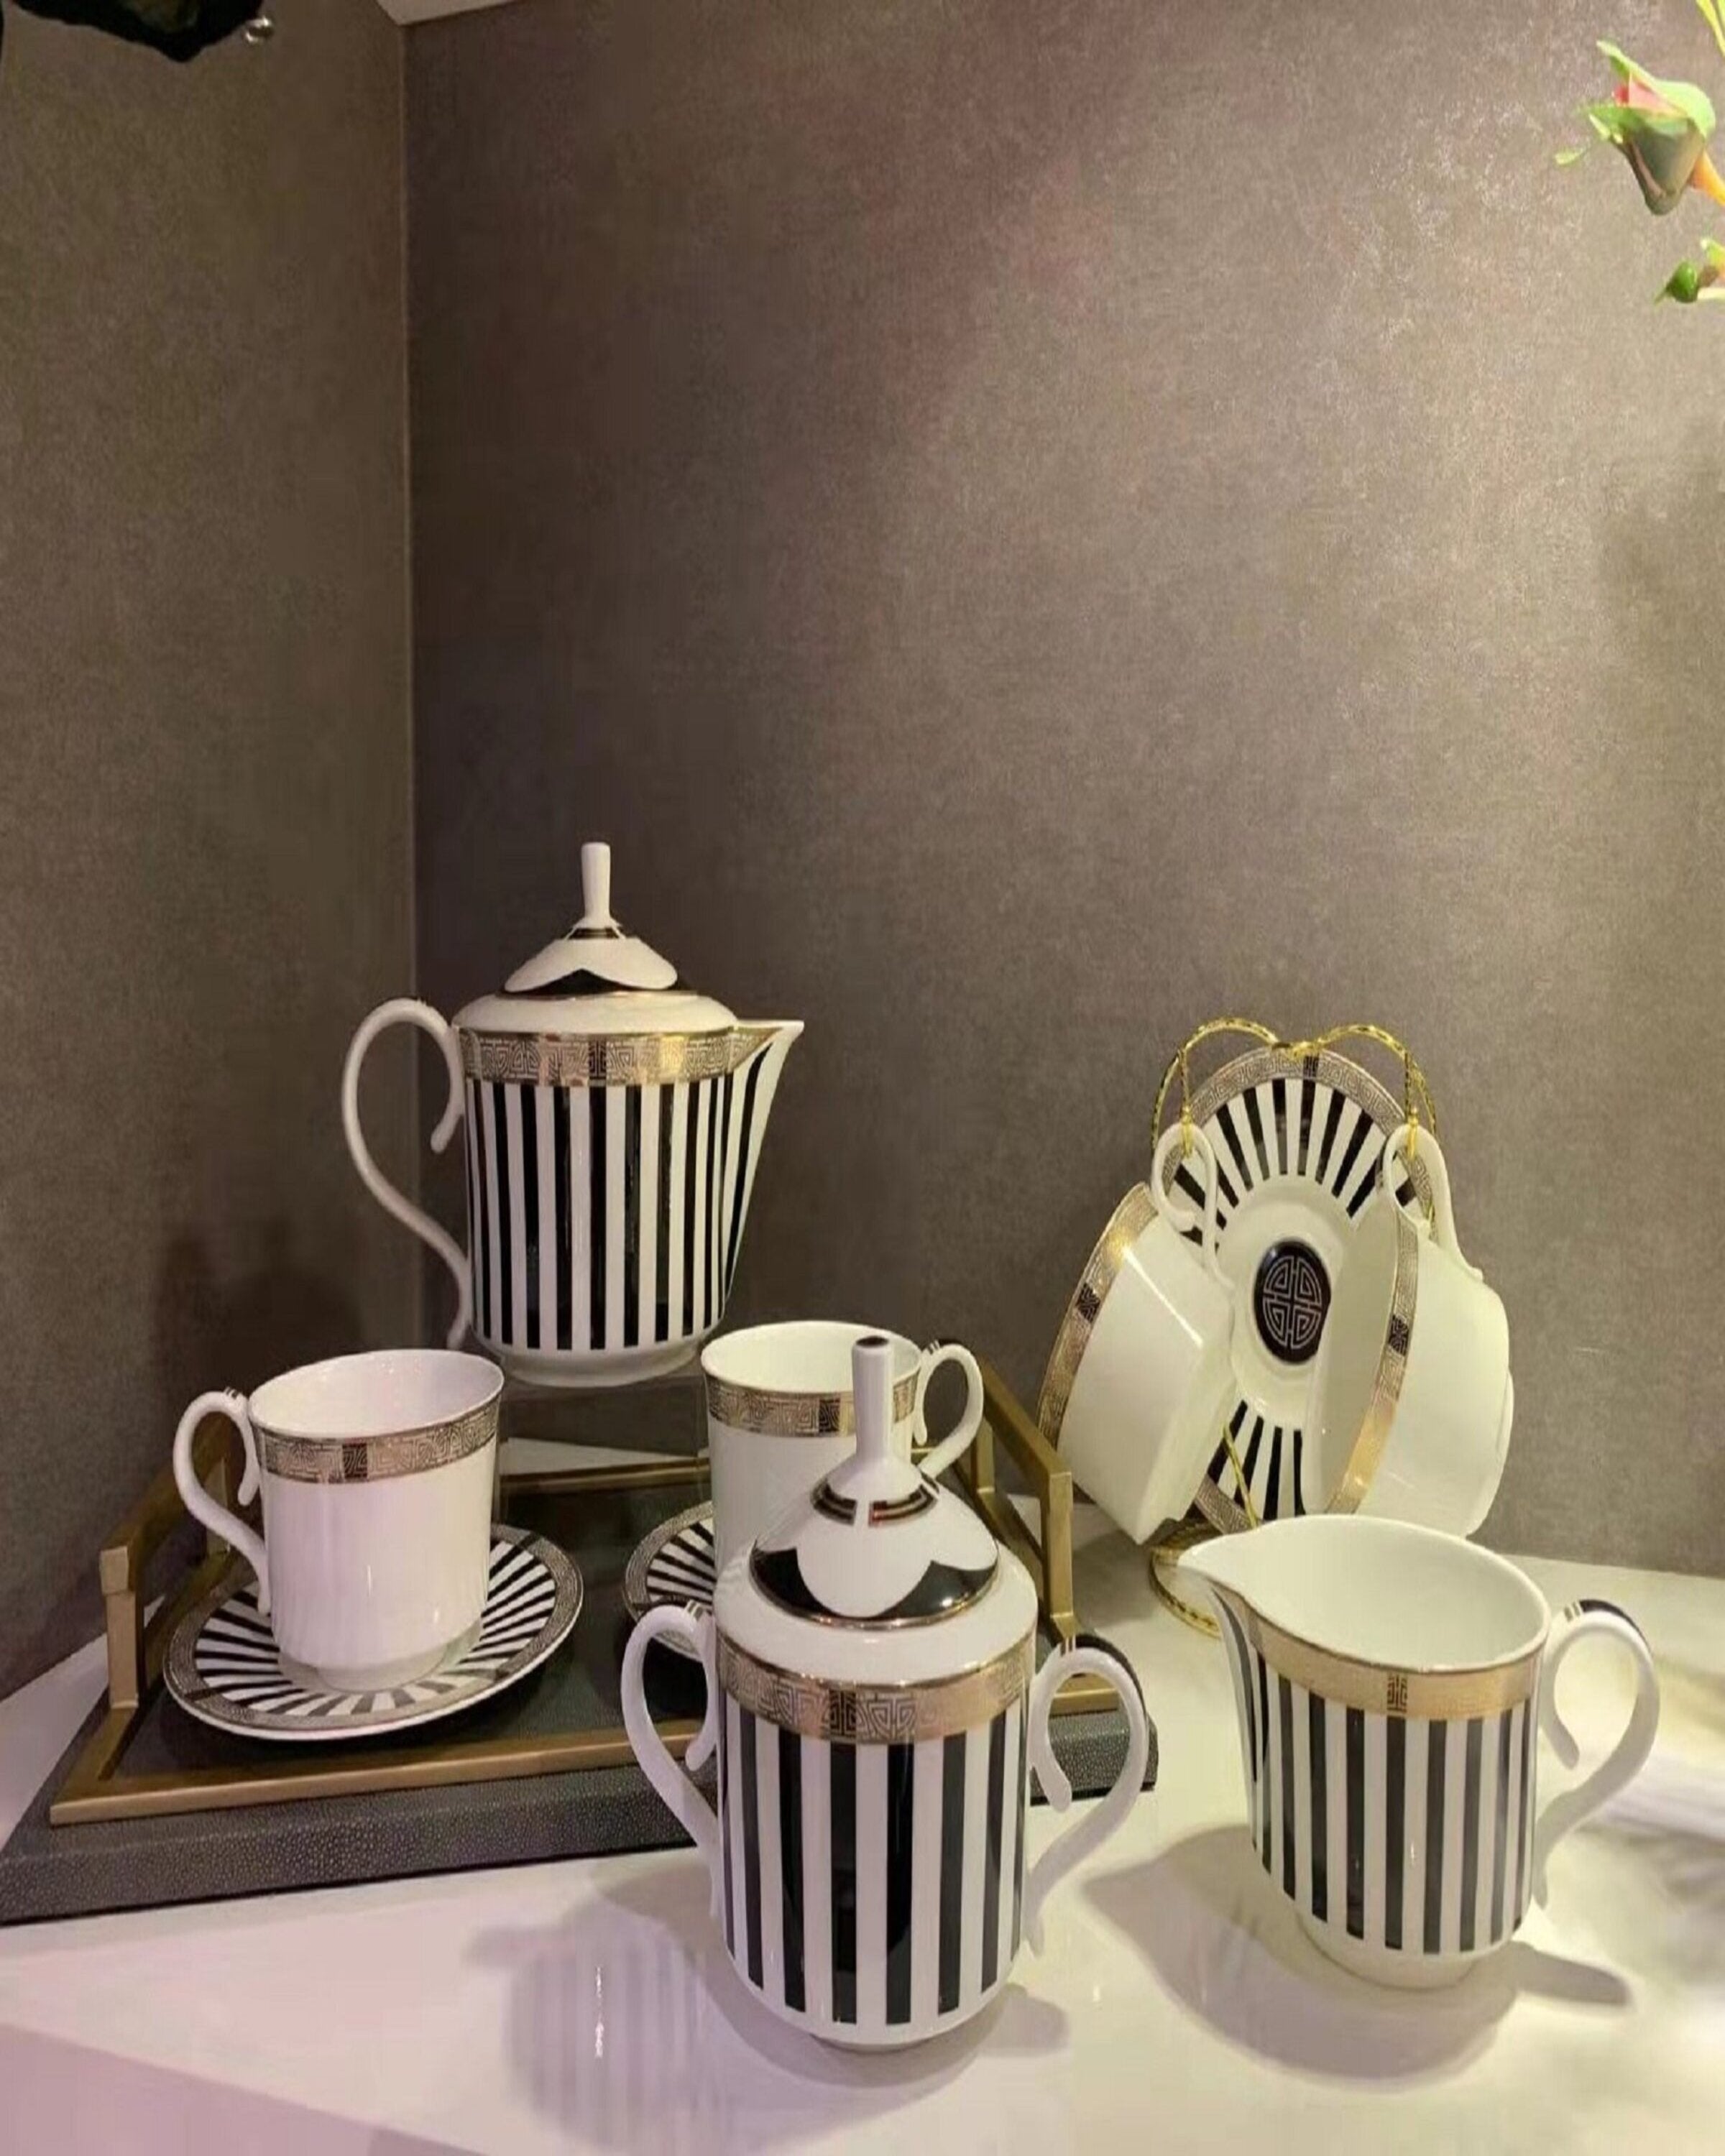 Buy Tea Set Online White And Black Color